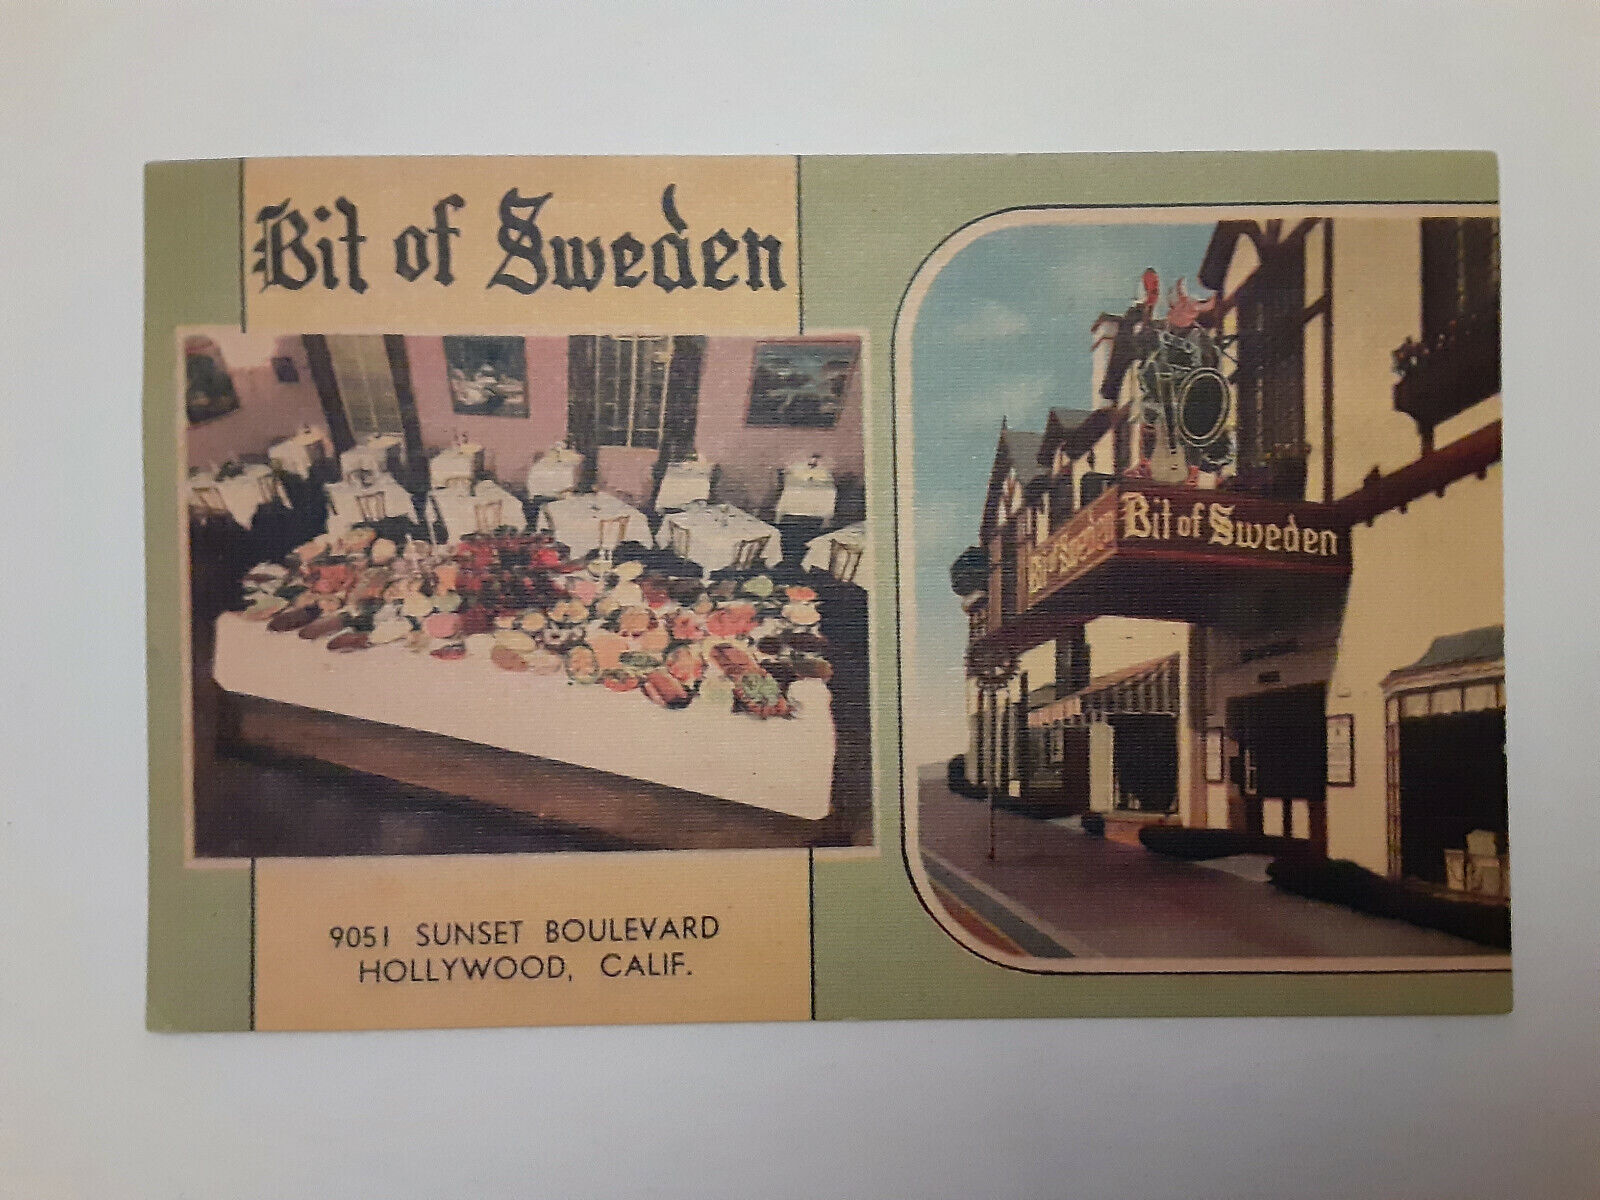 Vintage Uposted Bit of Sweden Linen Postcard MWM Bursheen Los Angeles CA